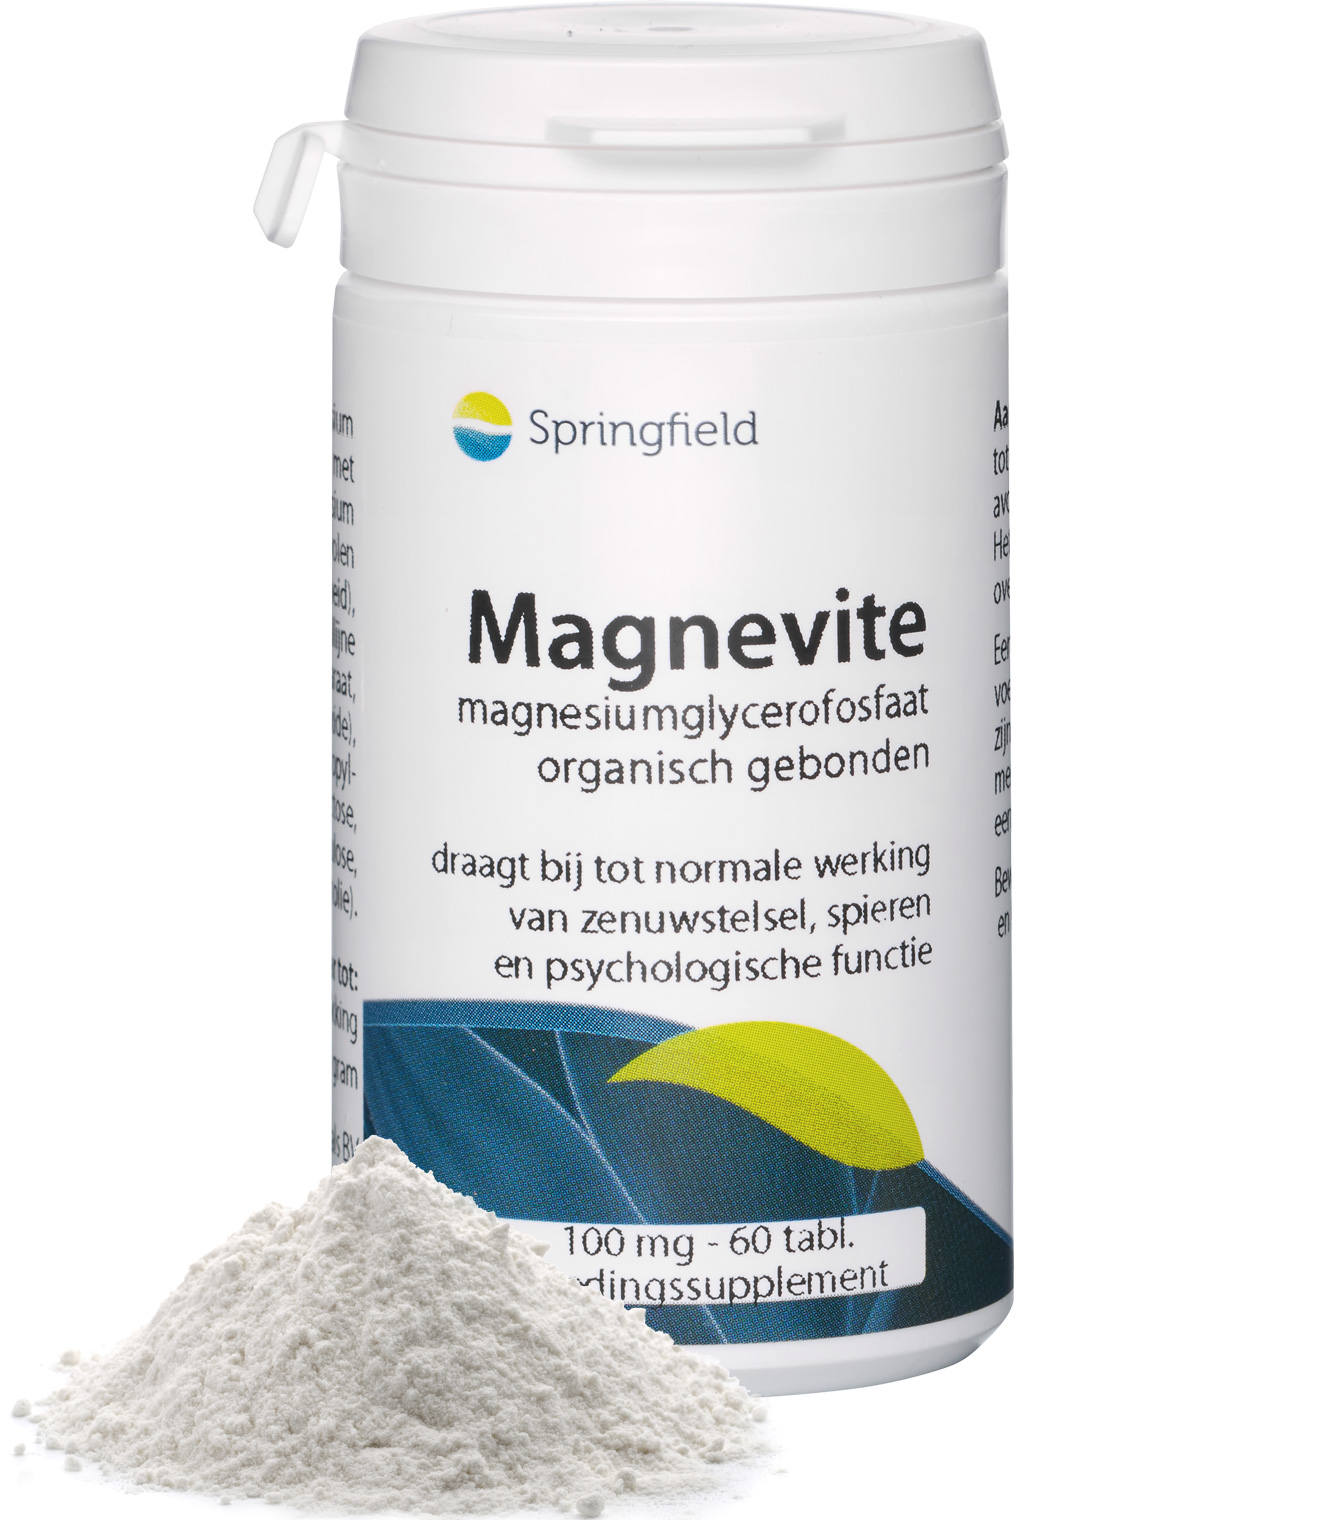 Magnevite met organisch gebonden magnesium